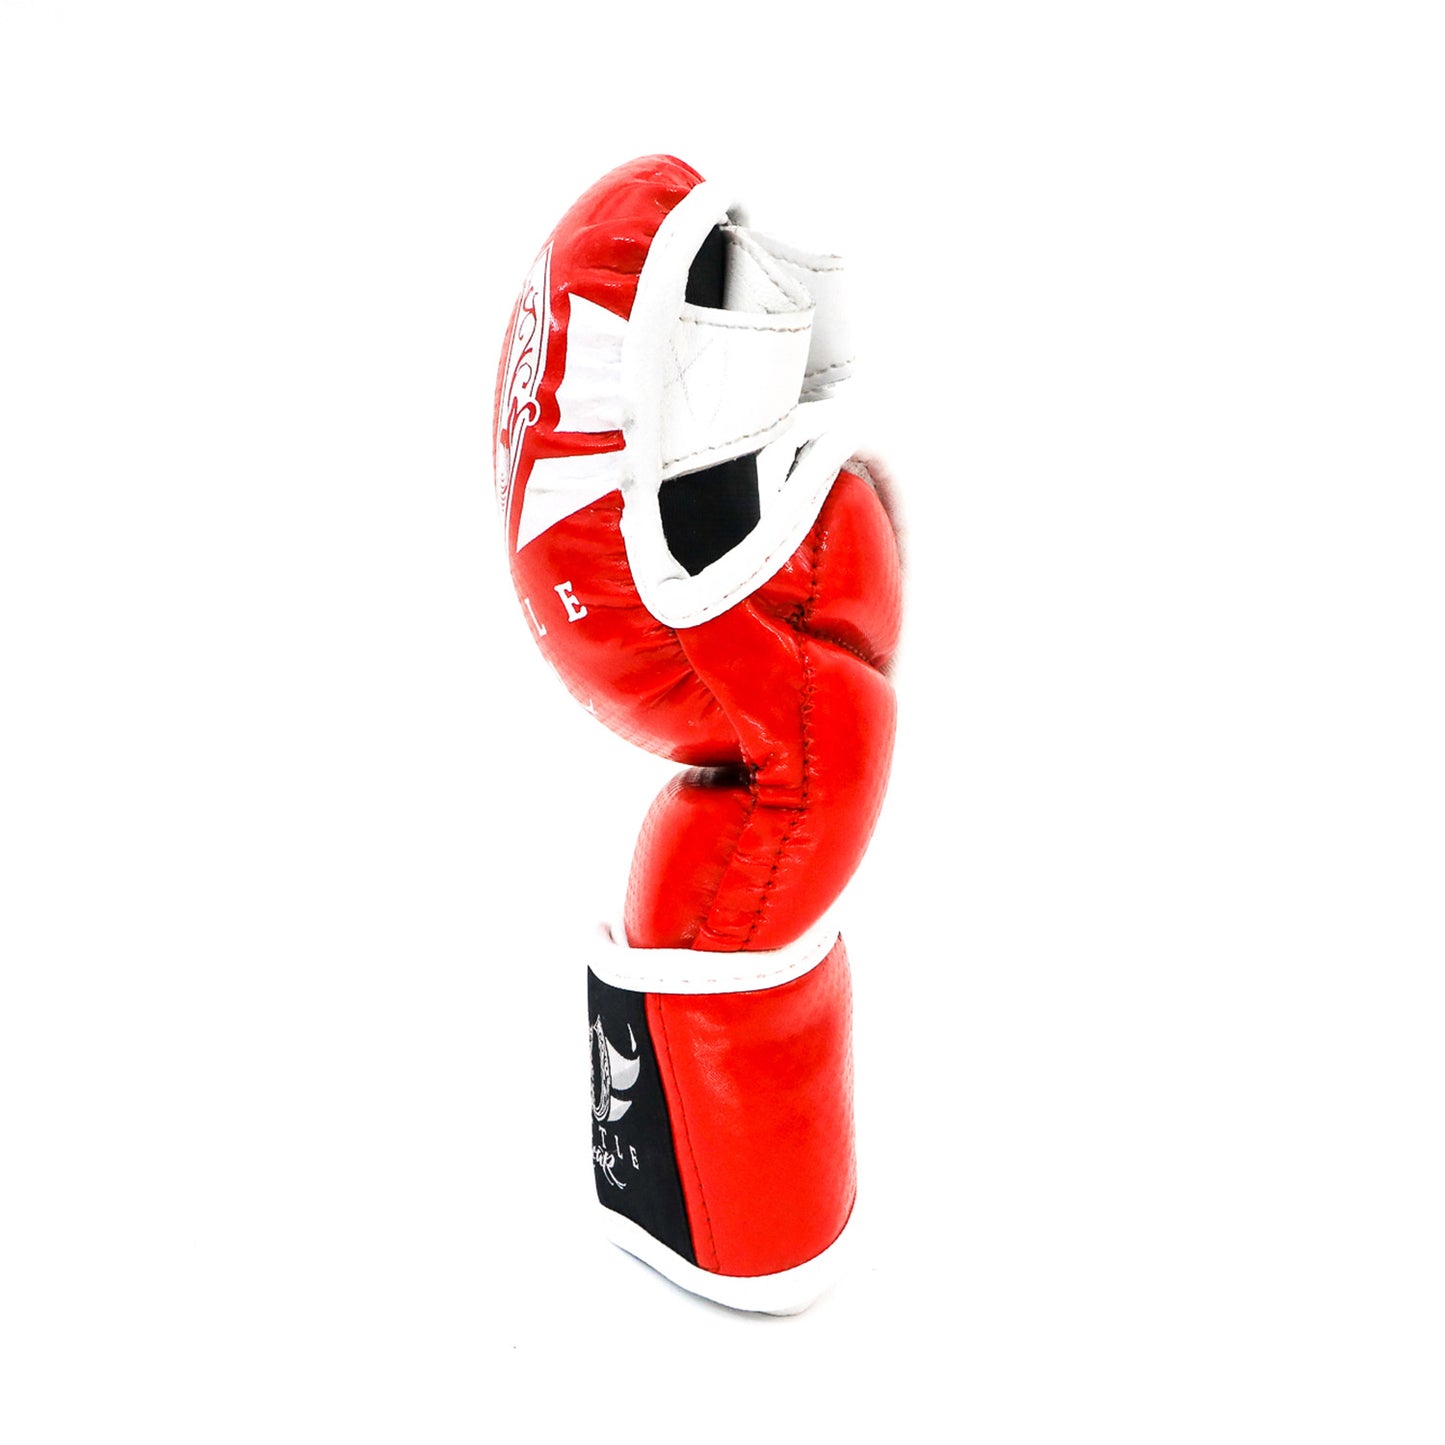 GANT DE PANCRACE / MMA SPARRING – ROUGE – WETTLE GEAR